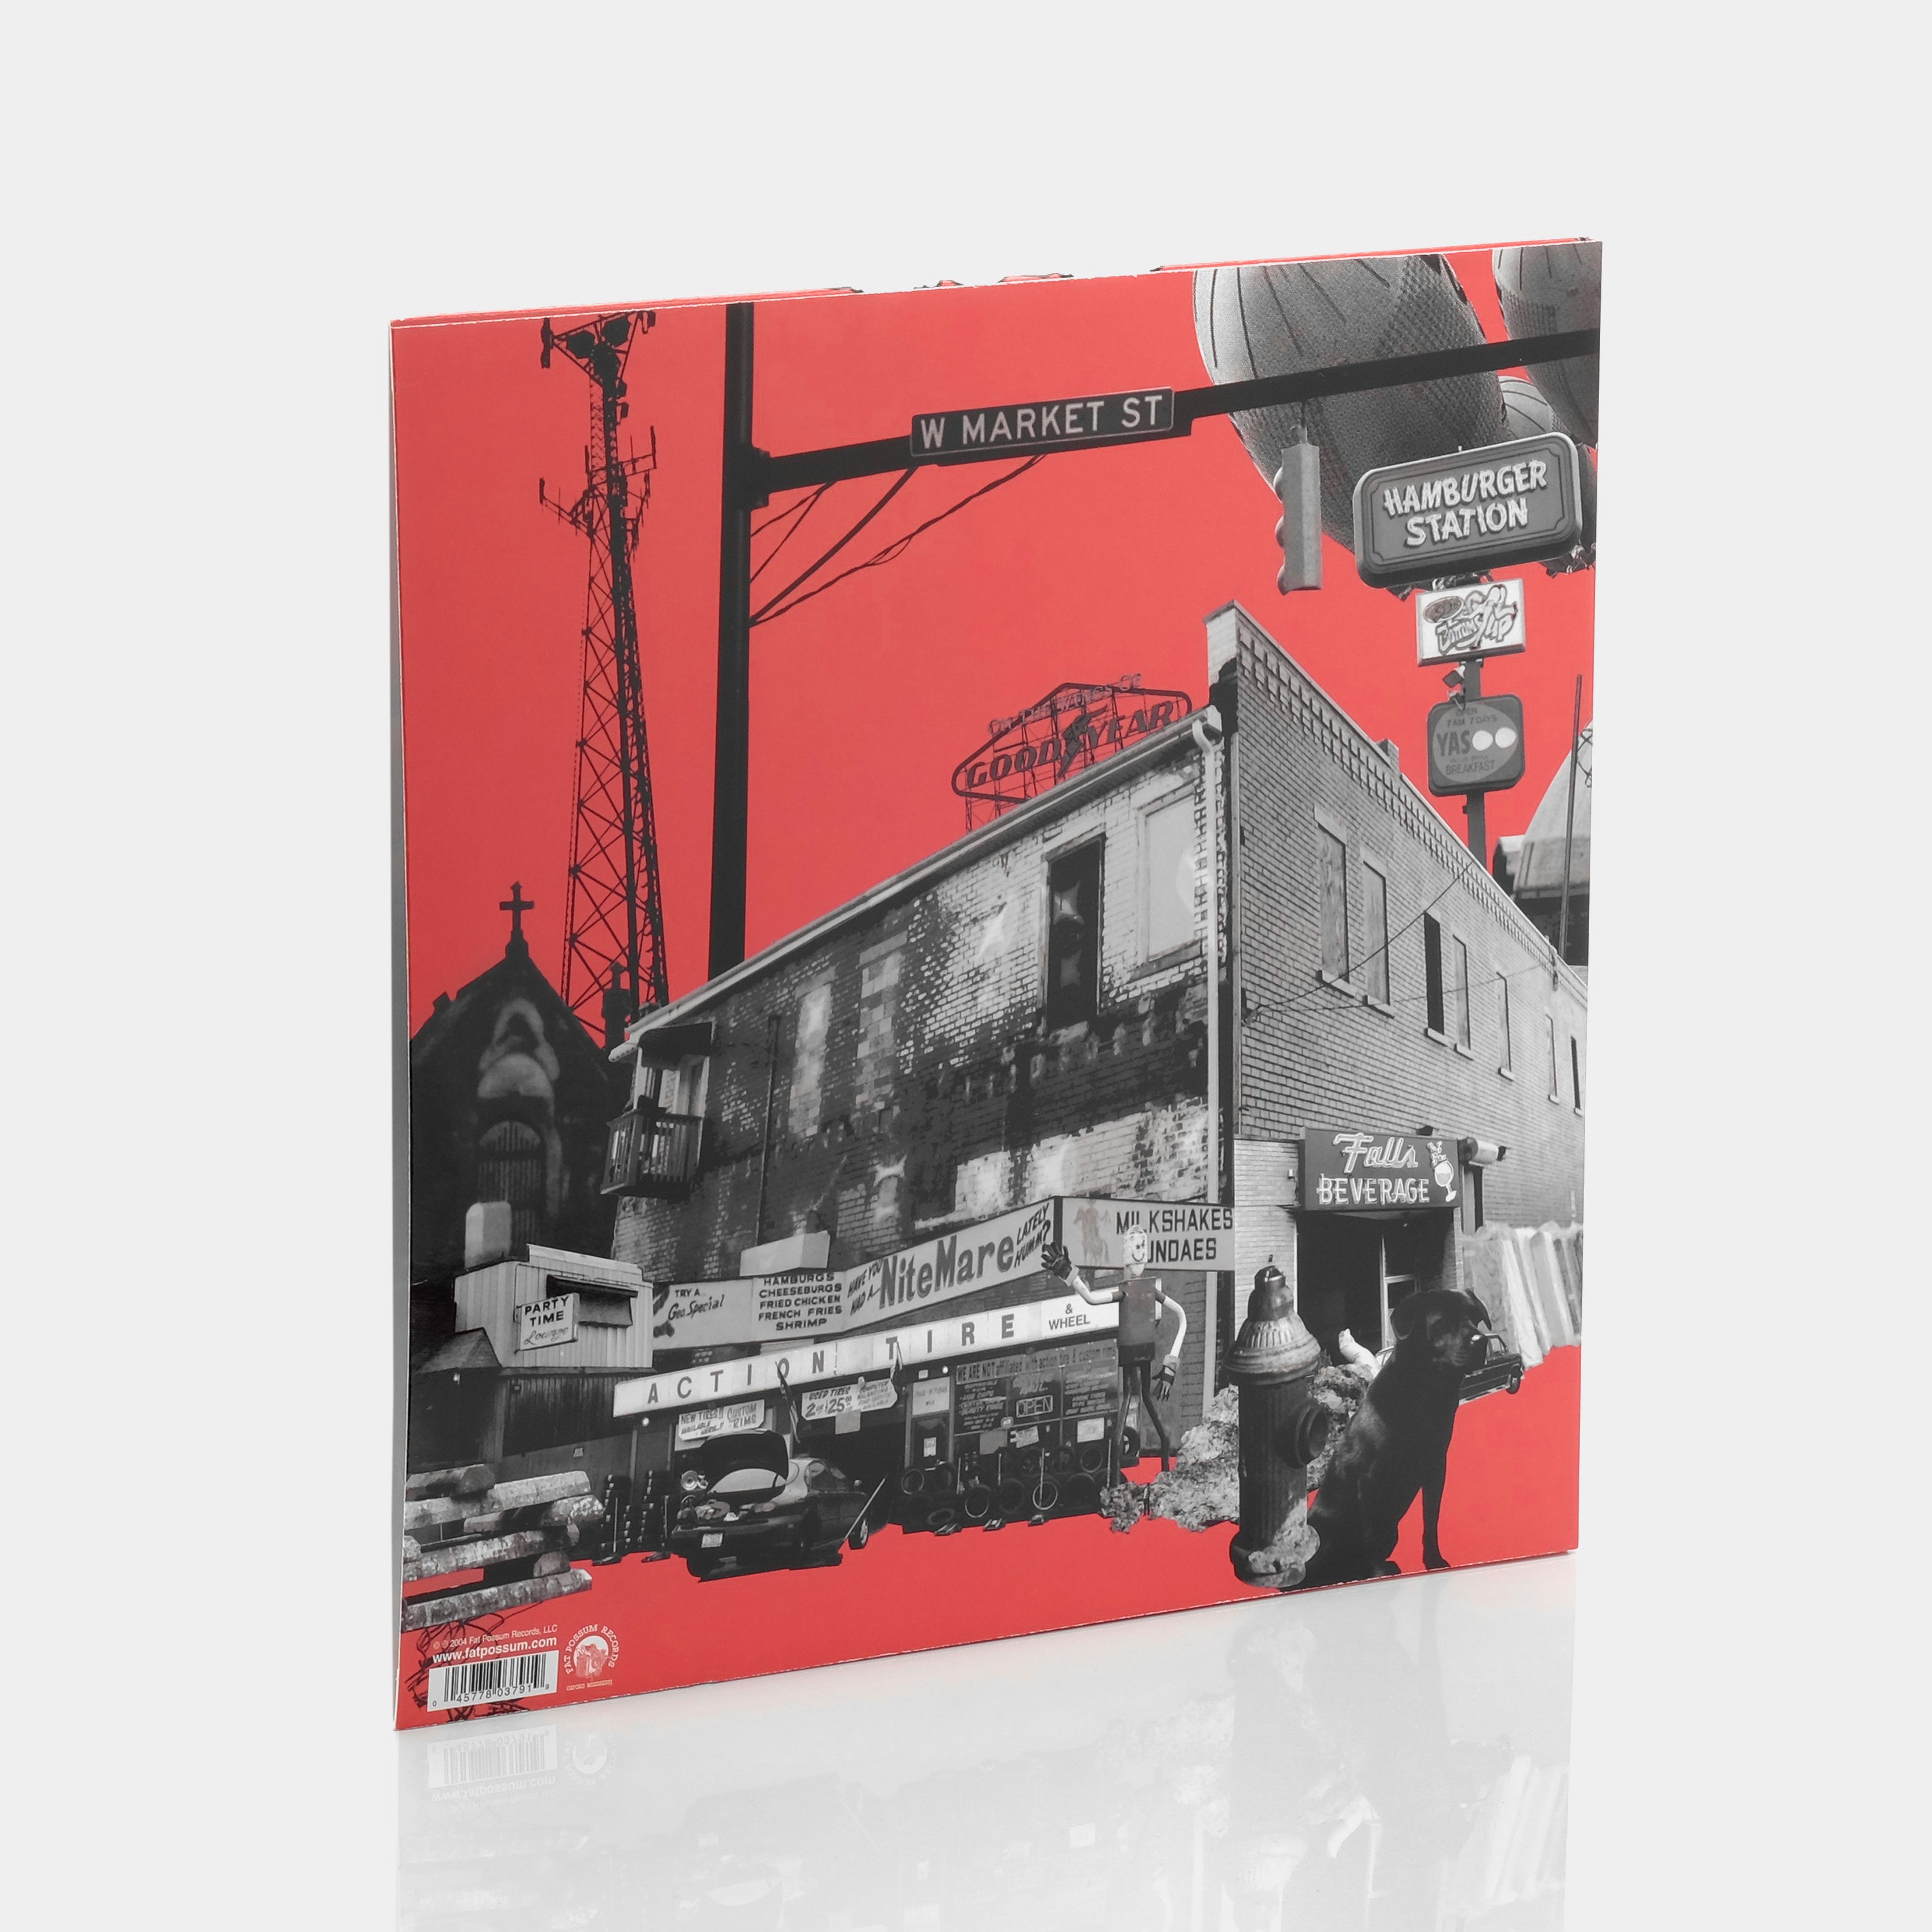 The Black Keys - Rubber Factory LP Vinyl Record